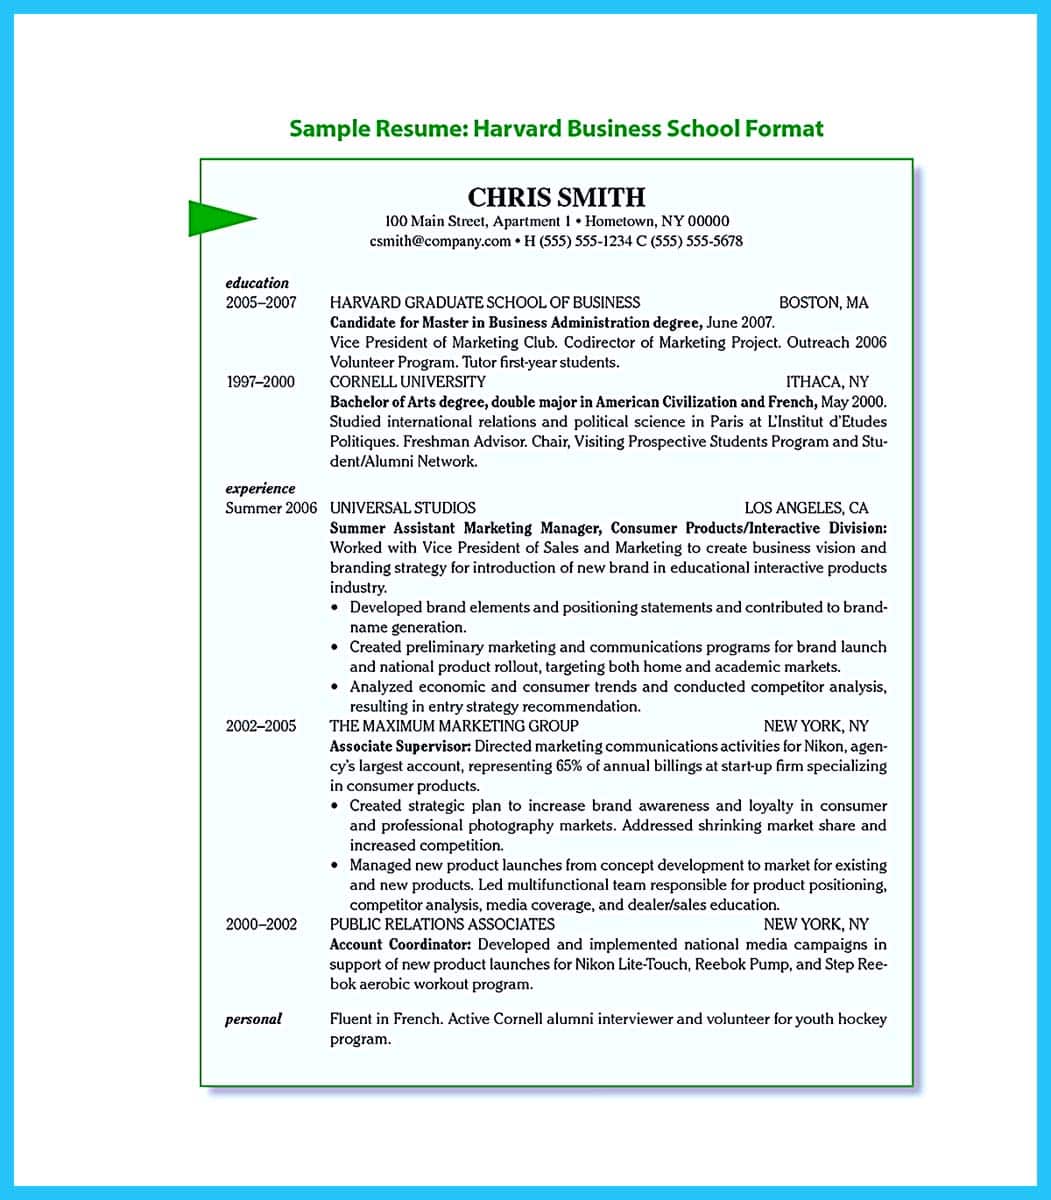 Sample resume harvard business school format